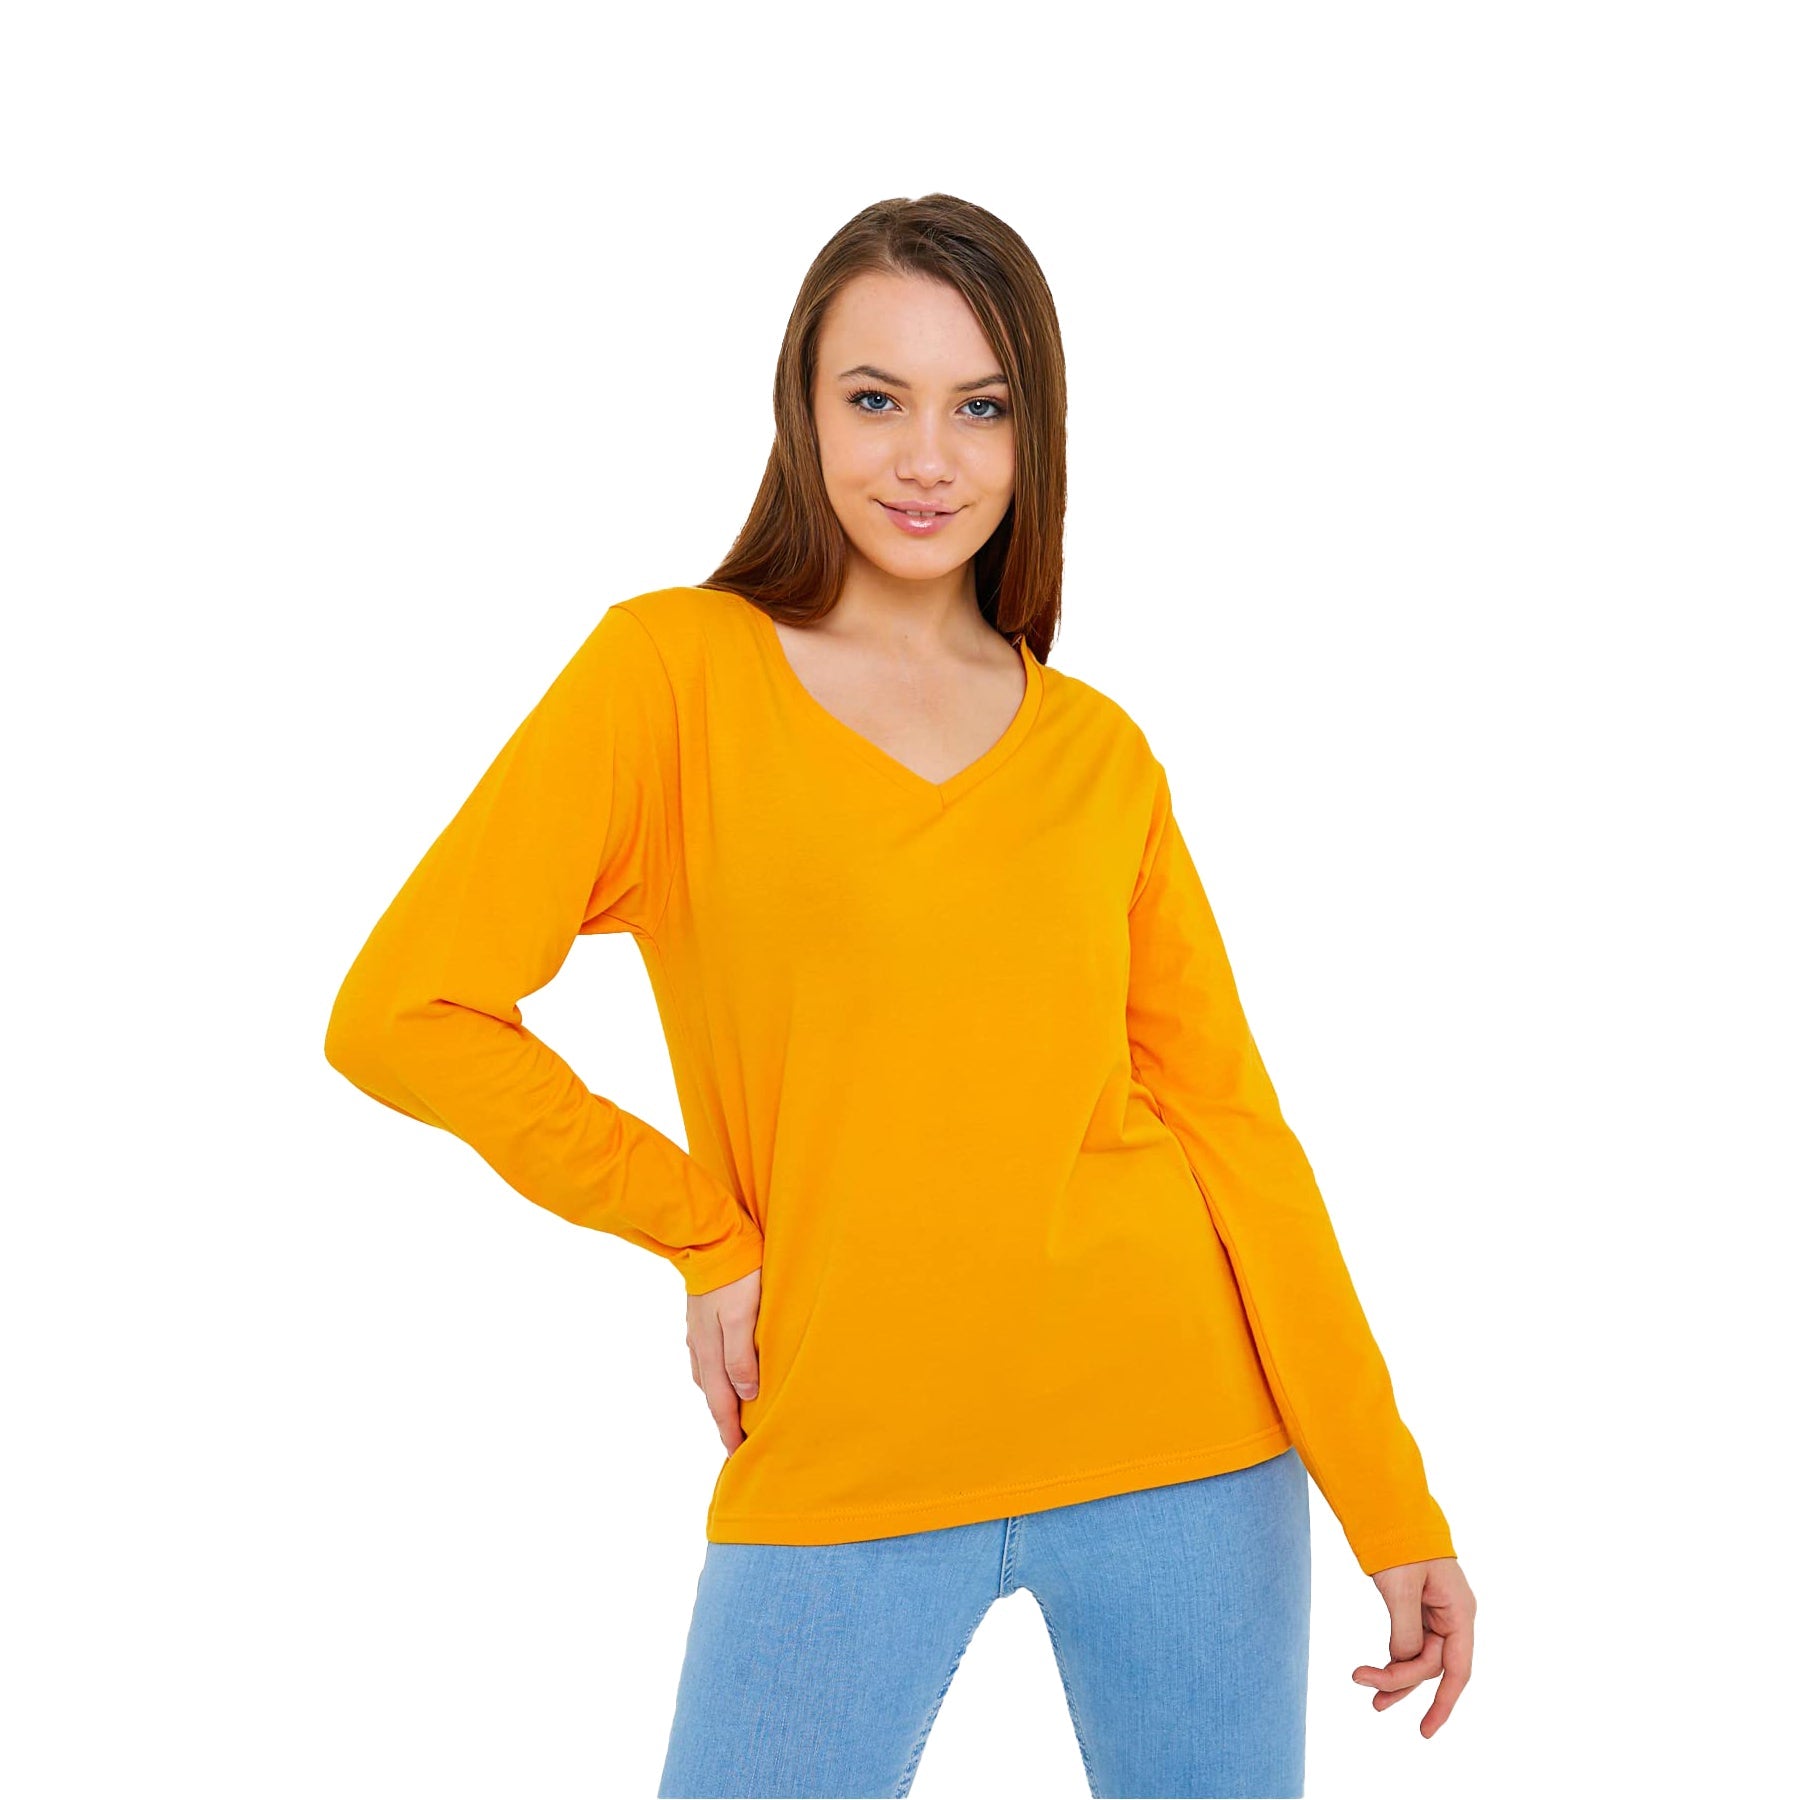 Long Sleeve V-Neck Shirts for Women & Girls - Colorful Pima Cotton-90